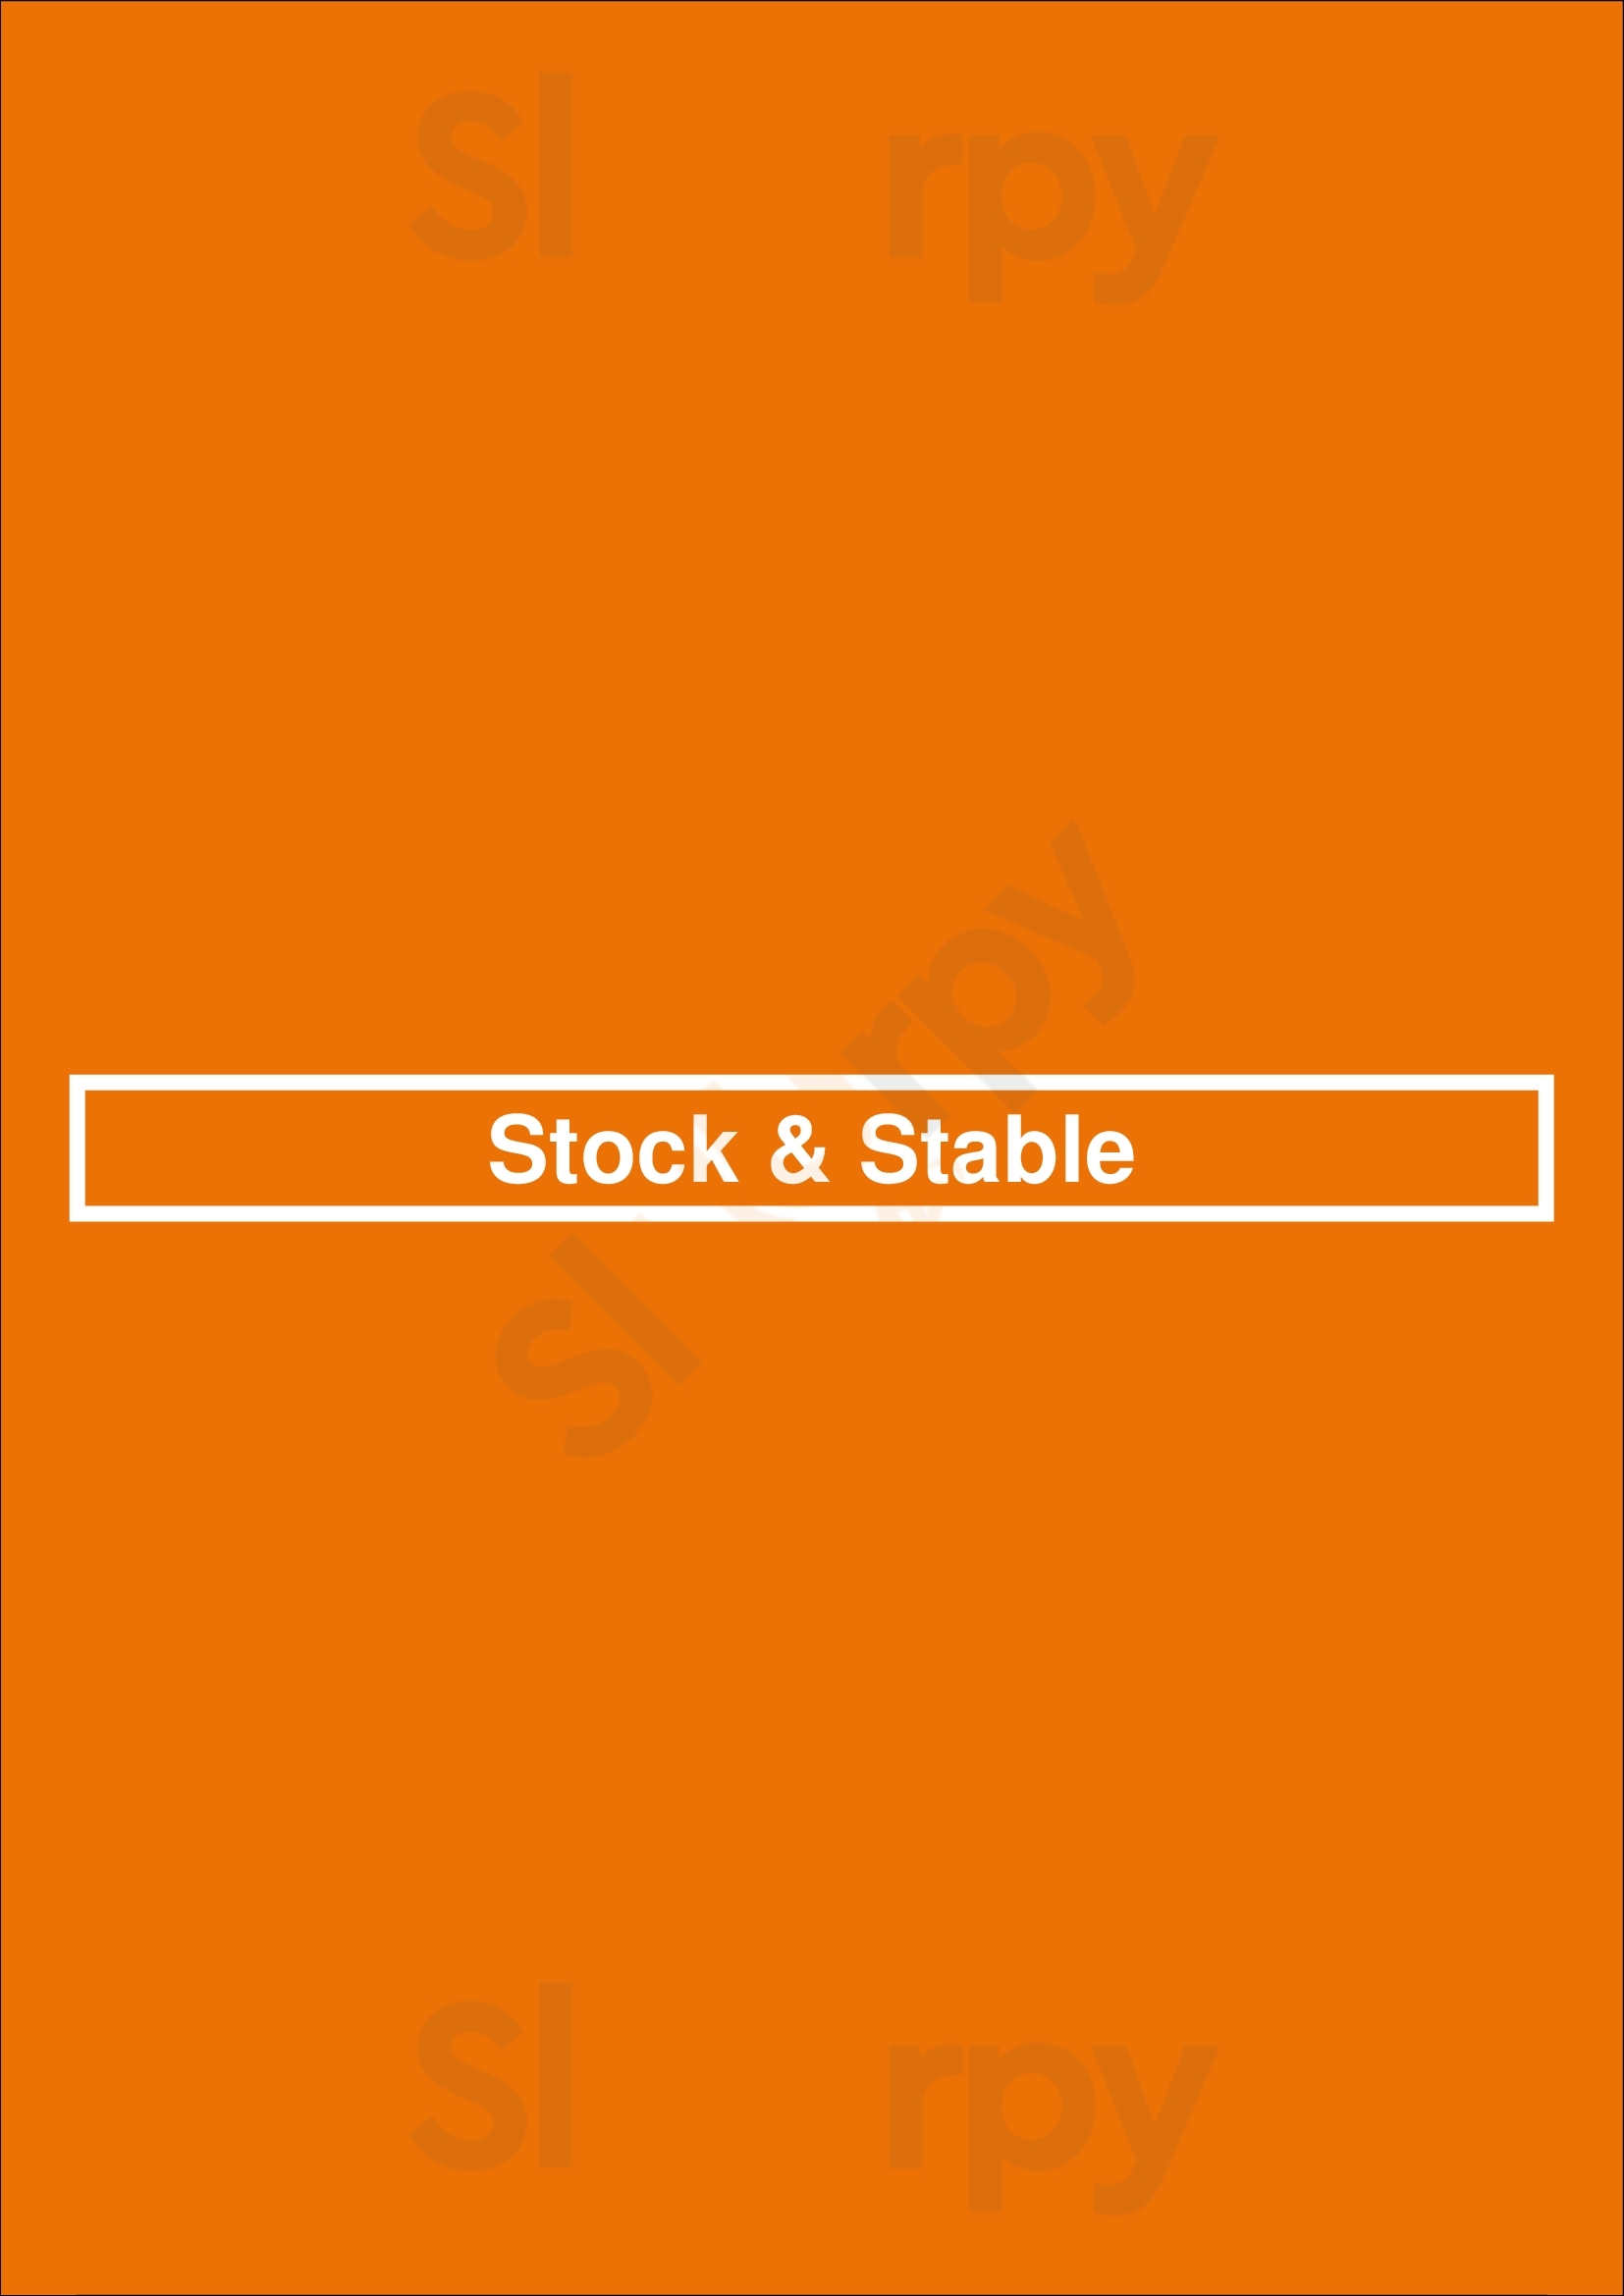 Stock & Stable Phoenix Menu - 1